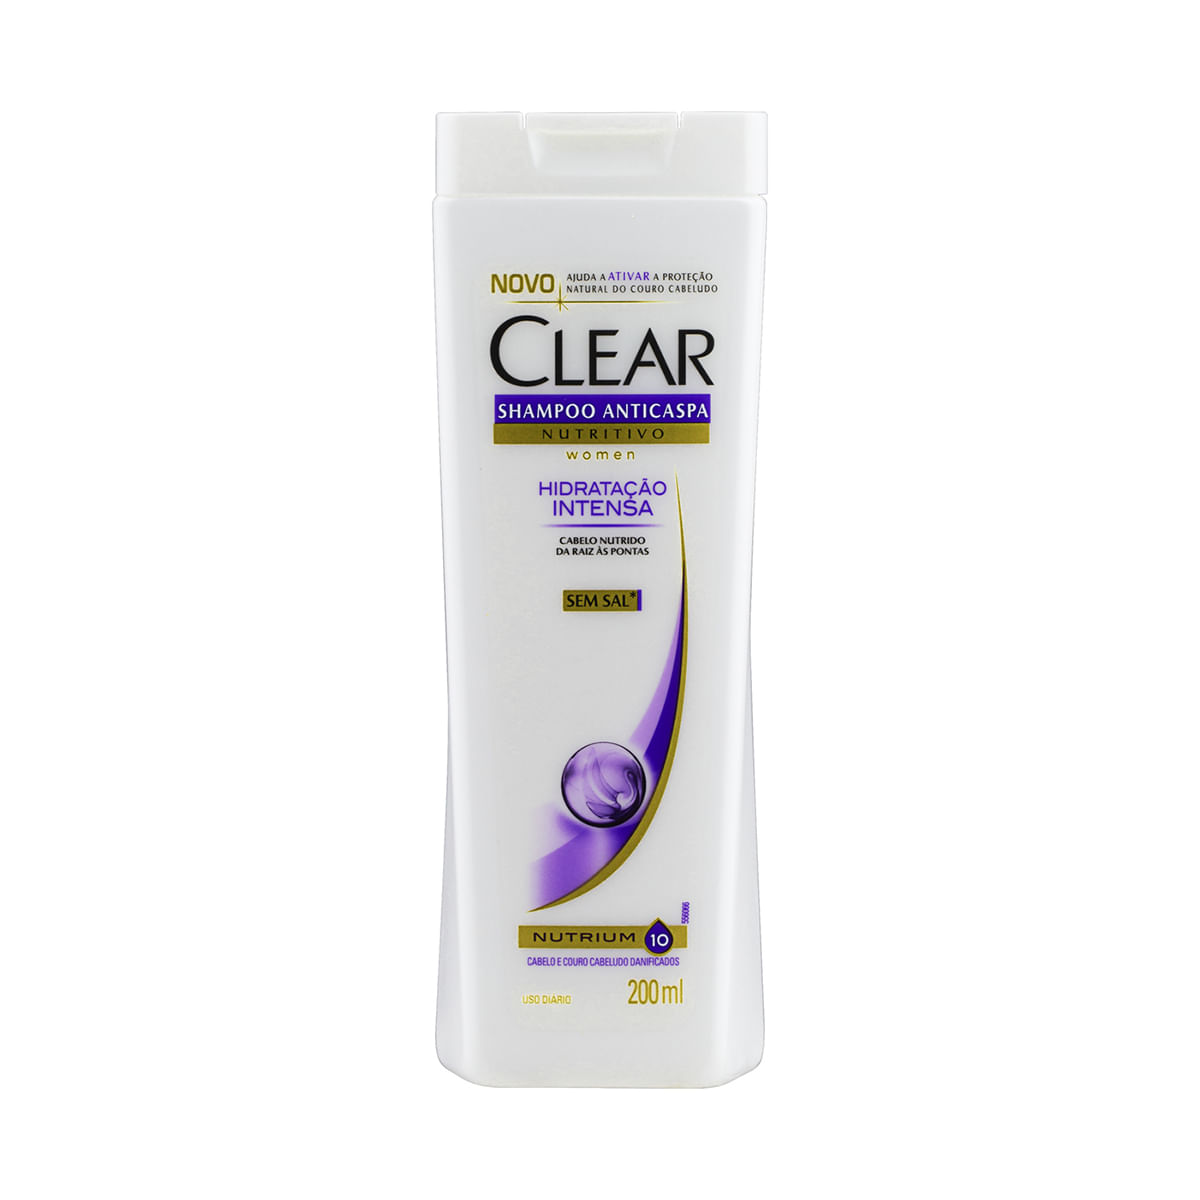 shampoo-anticaspa-clear-hidratacao-intensa-200ml-1.jpg